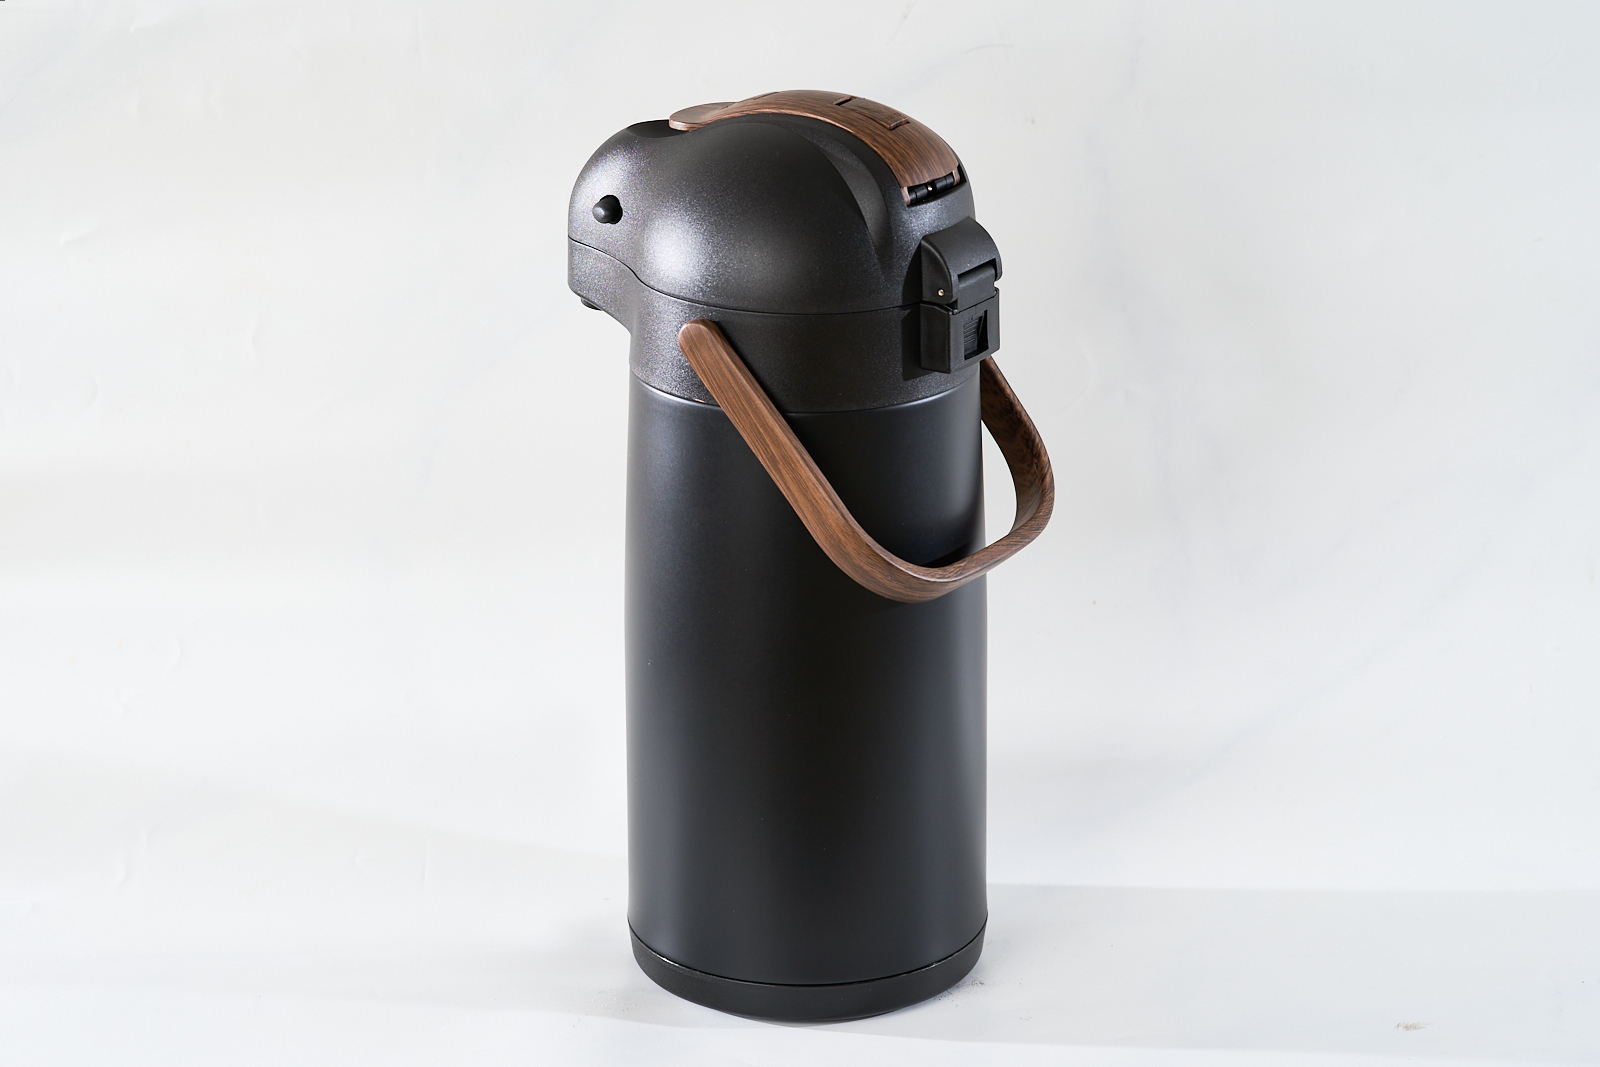 DSC06067 - Amazon hot sale wooden airpot coffee dispenser with pump 3 liter